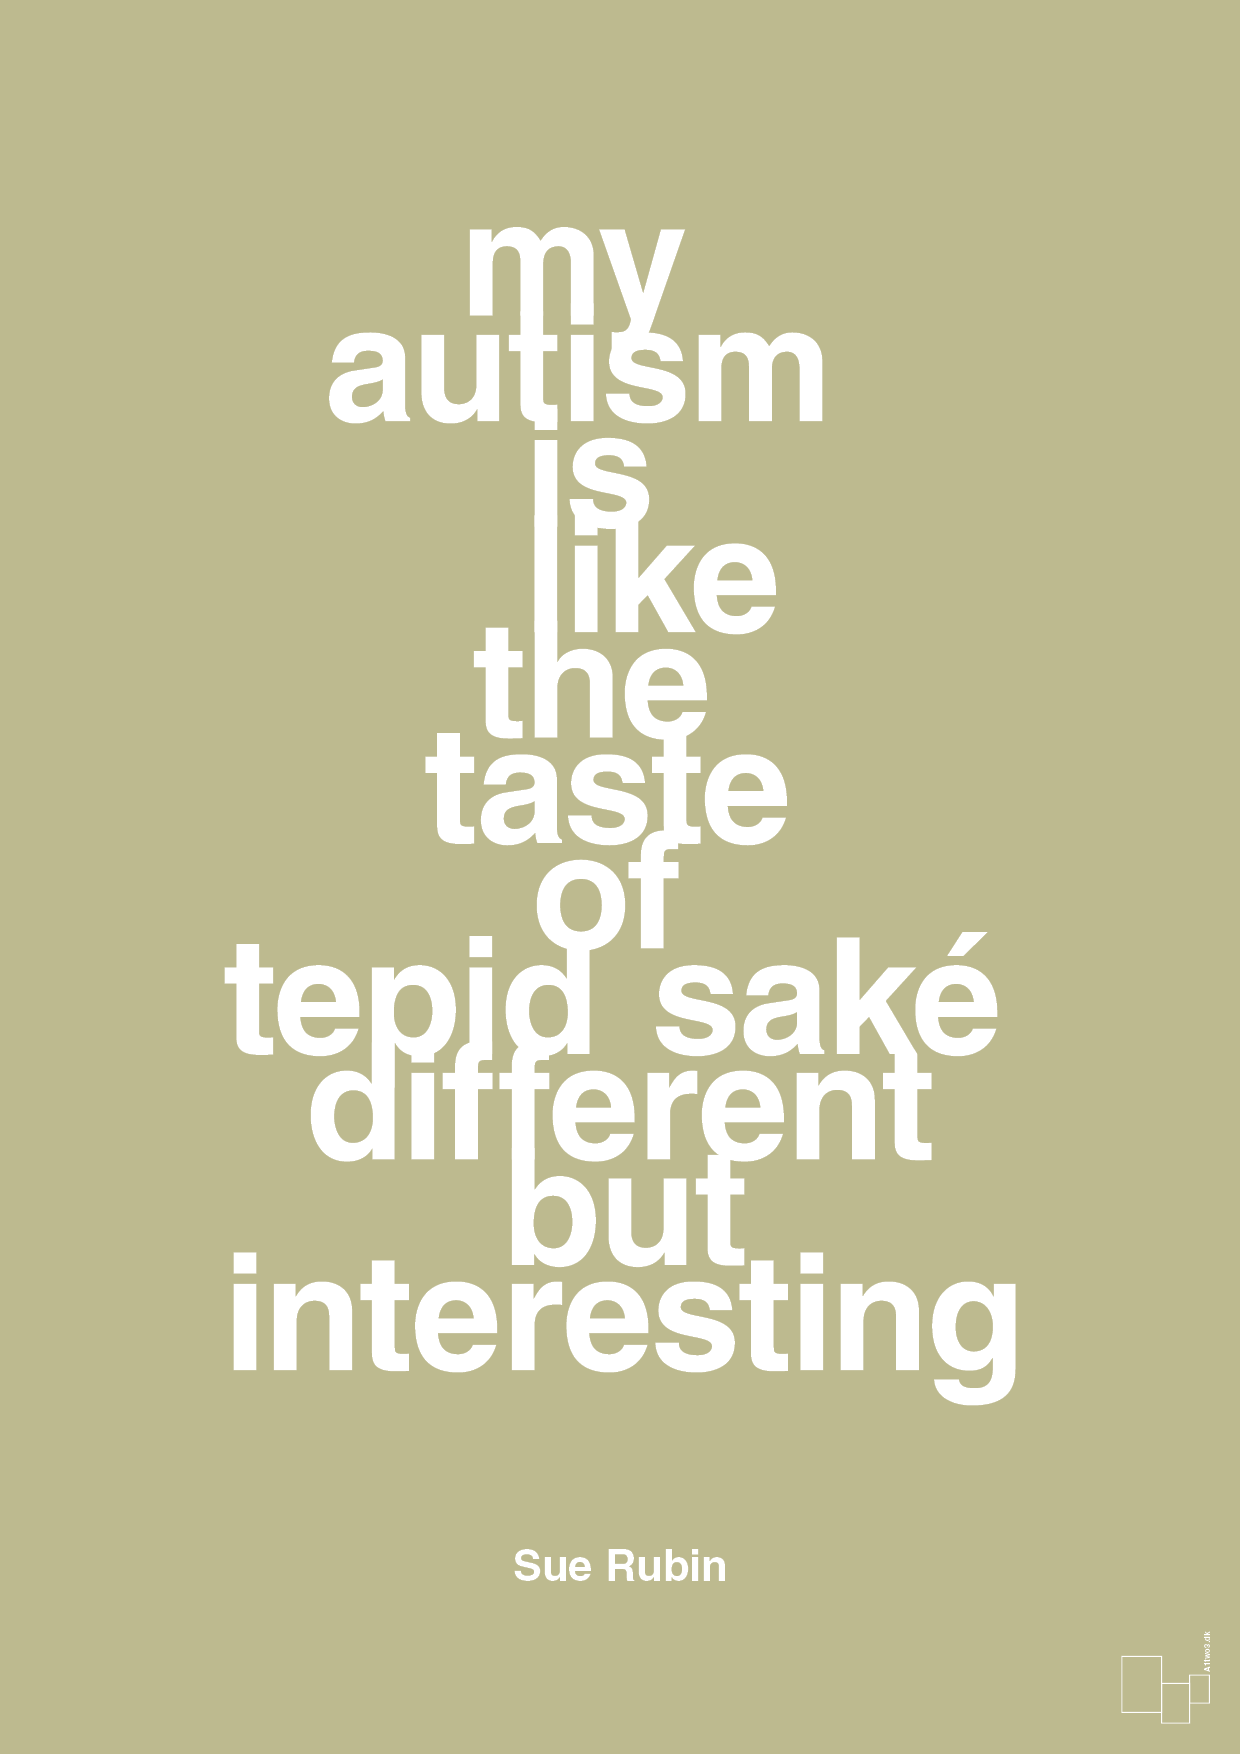 my autism is like the taste of tepid saké different but interesting - Plakat med Samfund i Back to Nature